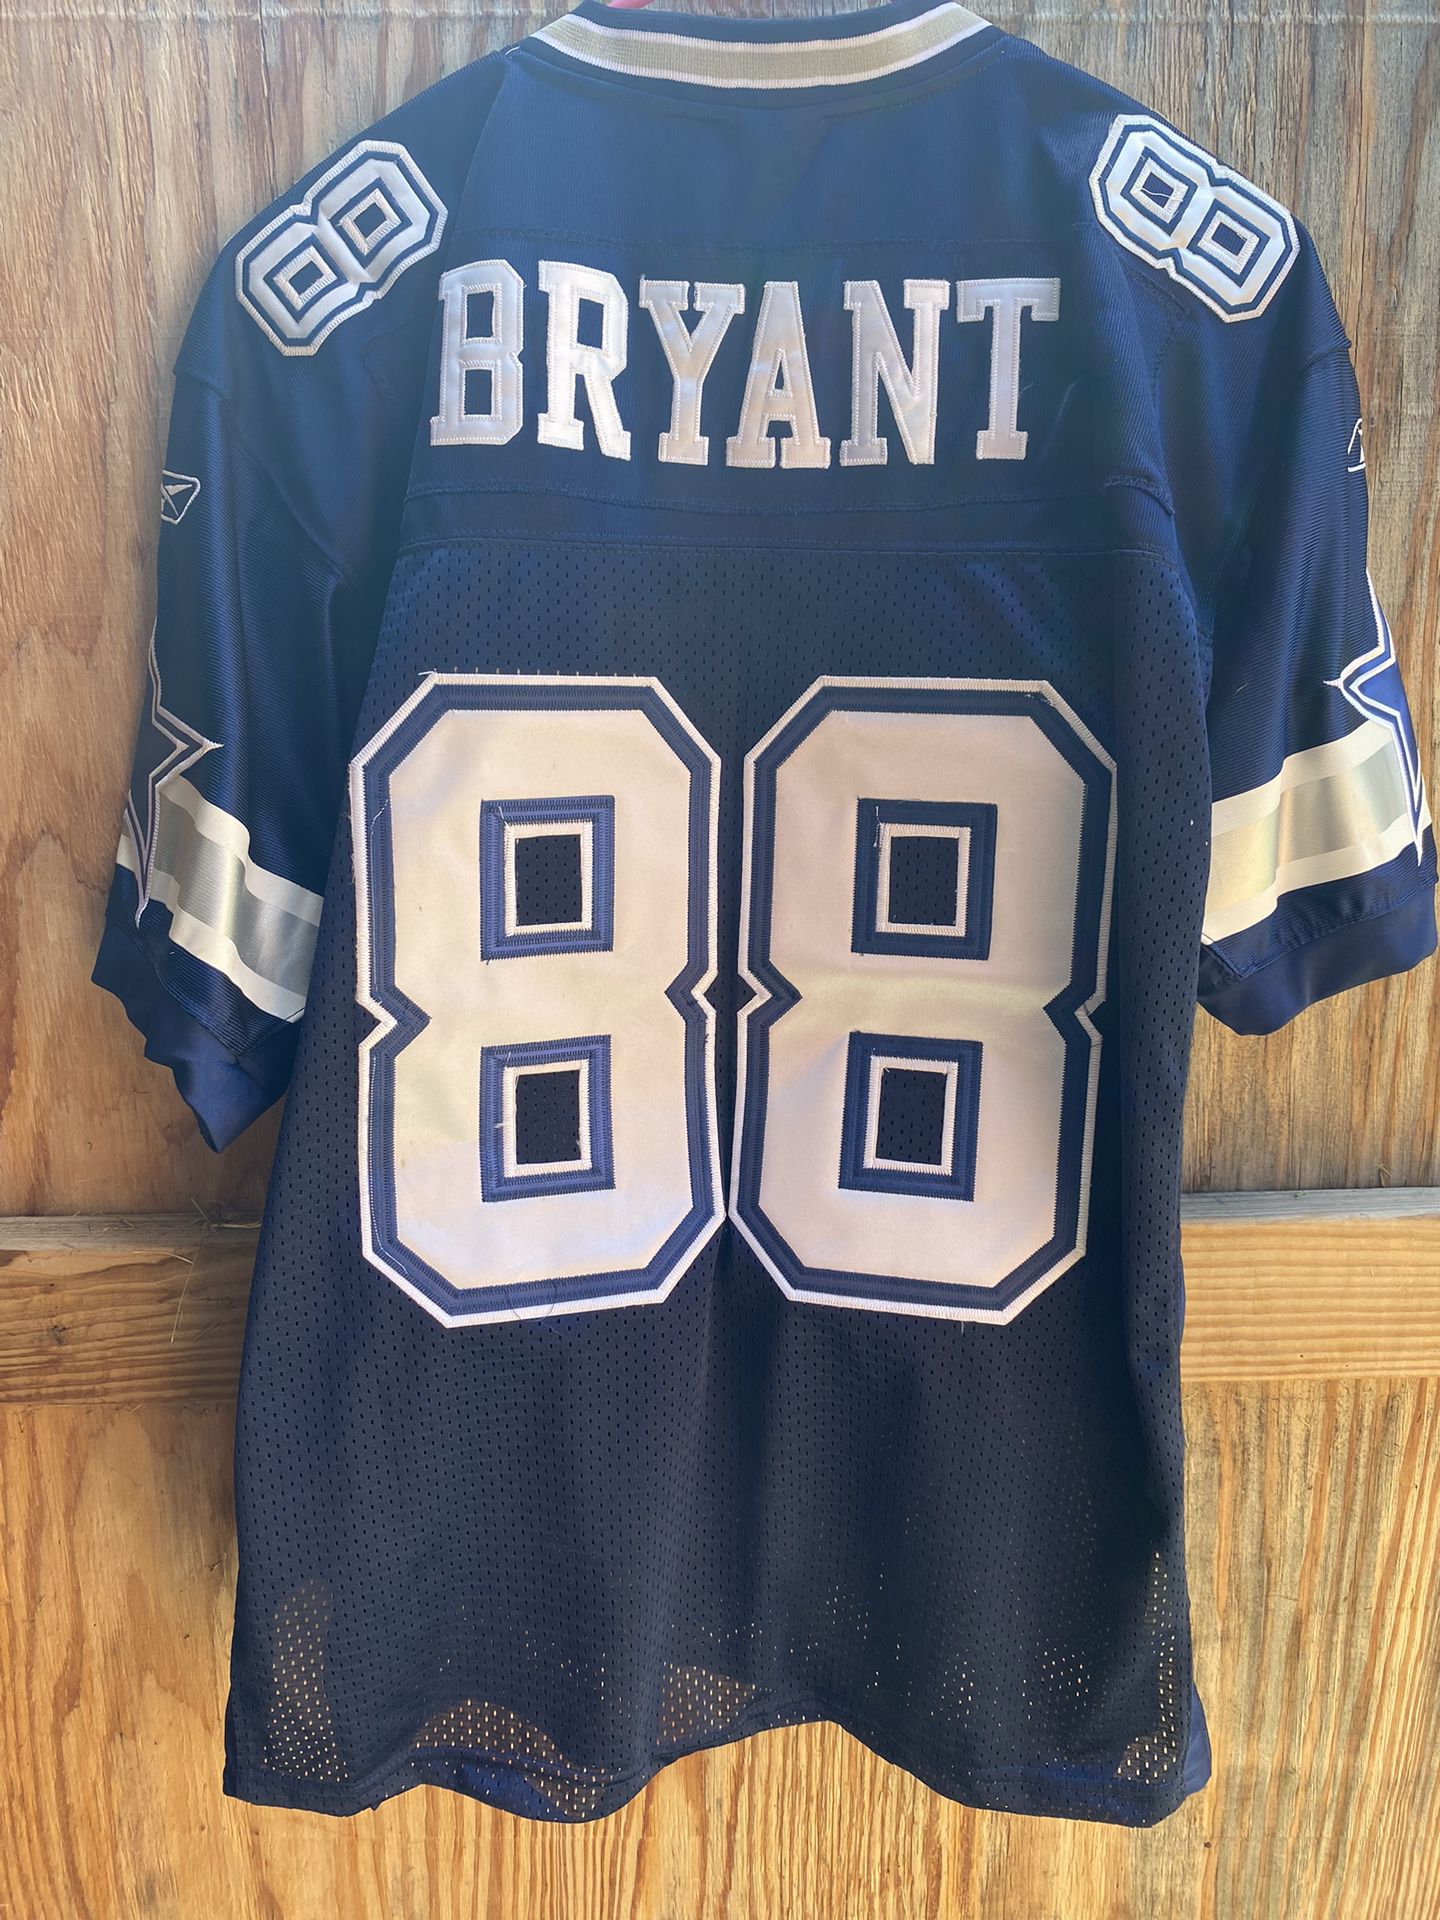 Dallas Cowboys Dez Bryant Jersey on Mercari  Dez bryant, Color rush jerseys,  Dallas cowboys players